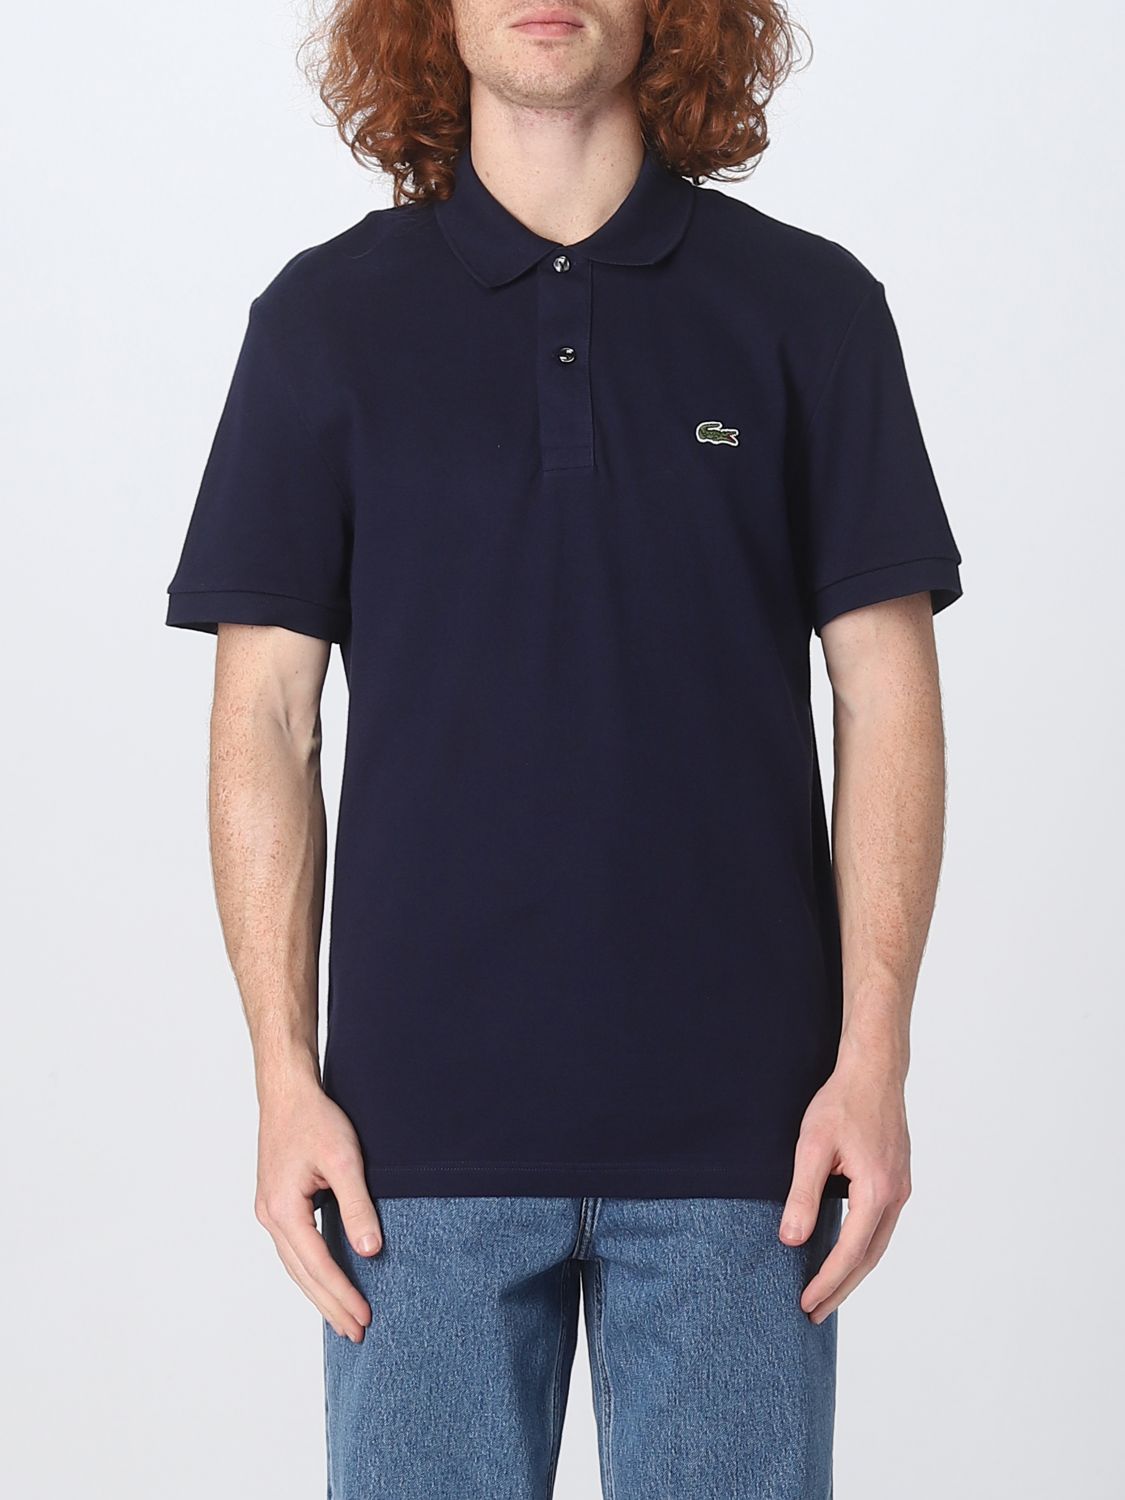 Bemiddelaar regeling Uitverkoop LACOSTE: polo shirt for man - Blue | Lacoste polo shirt PH4012 online on  GIGLIO.COM